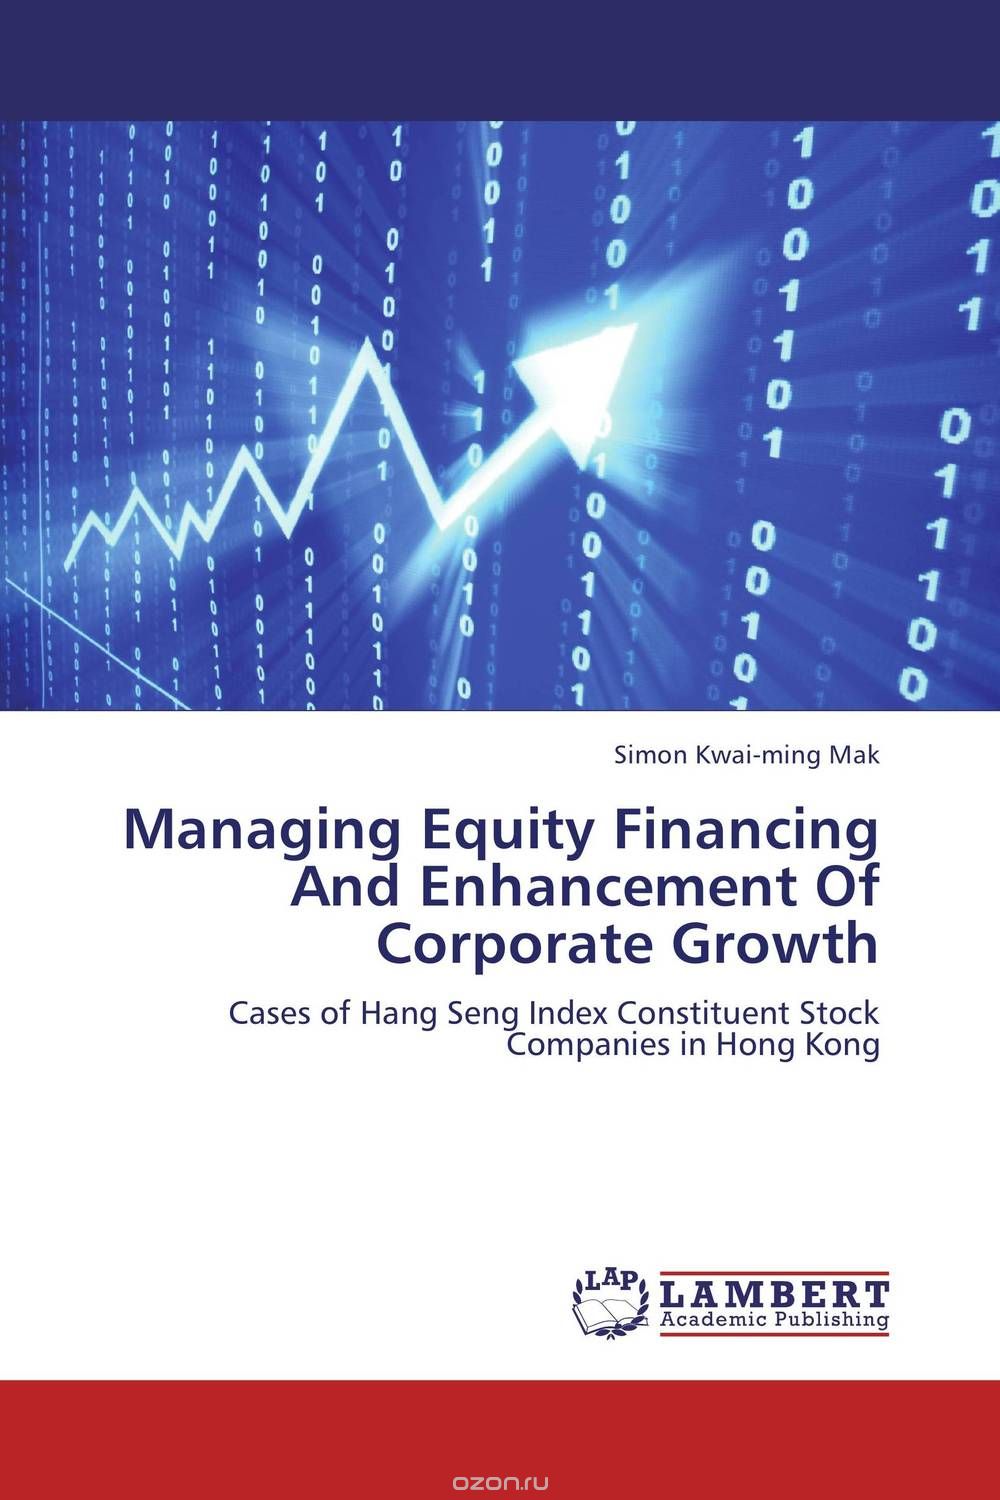 Скачать книгу "Managing Equity Financing And Enhancement Of Corporate Growth"